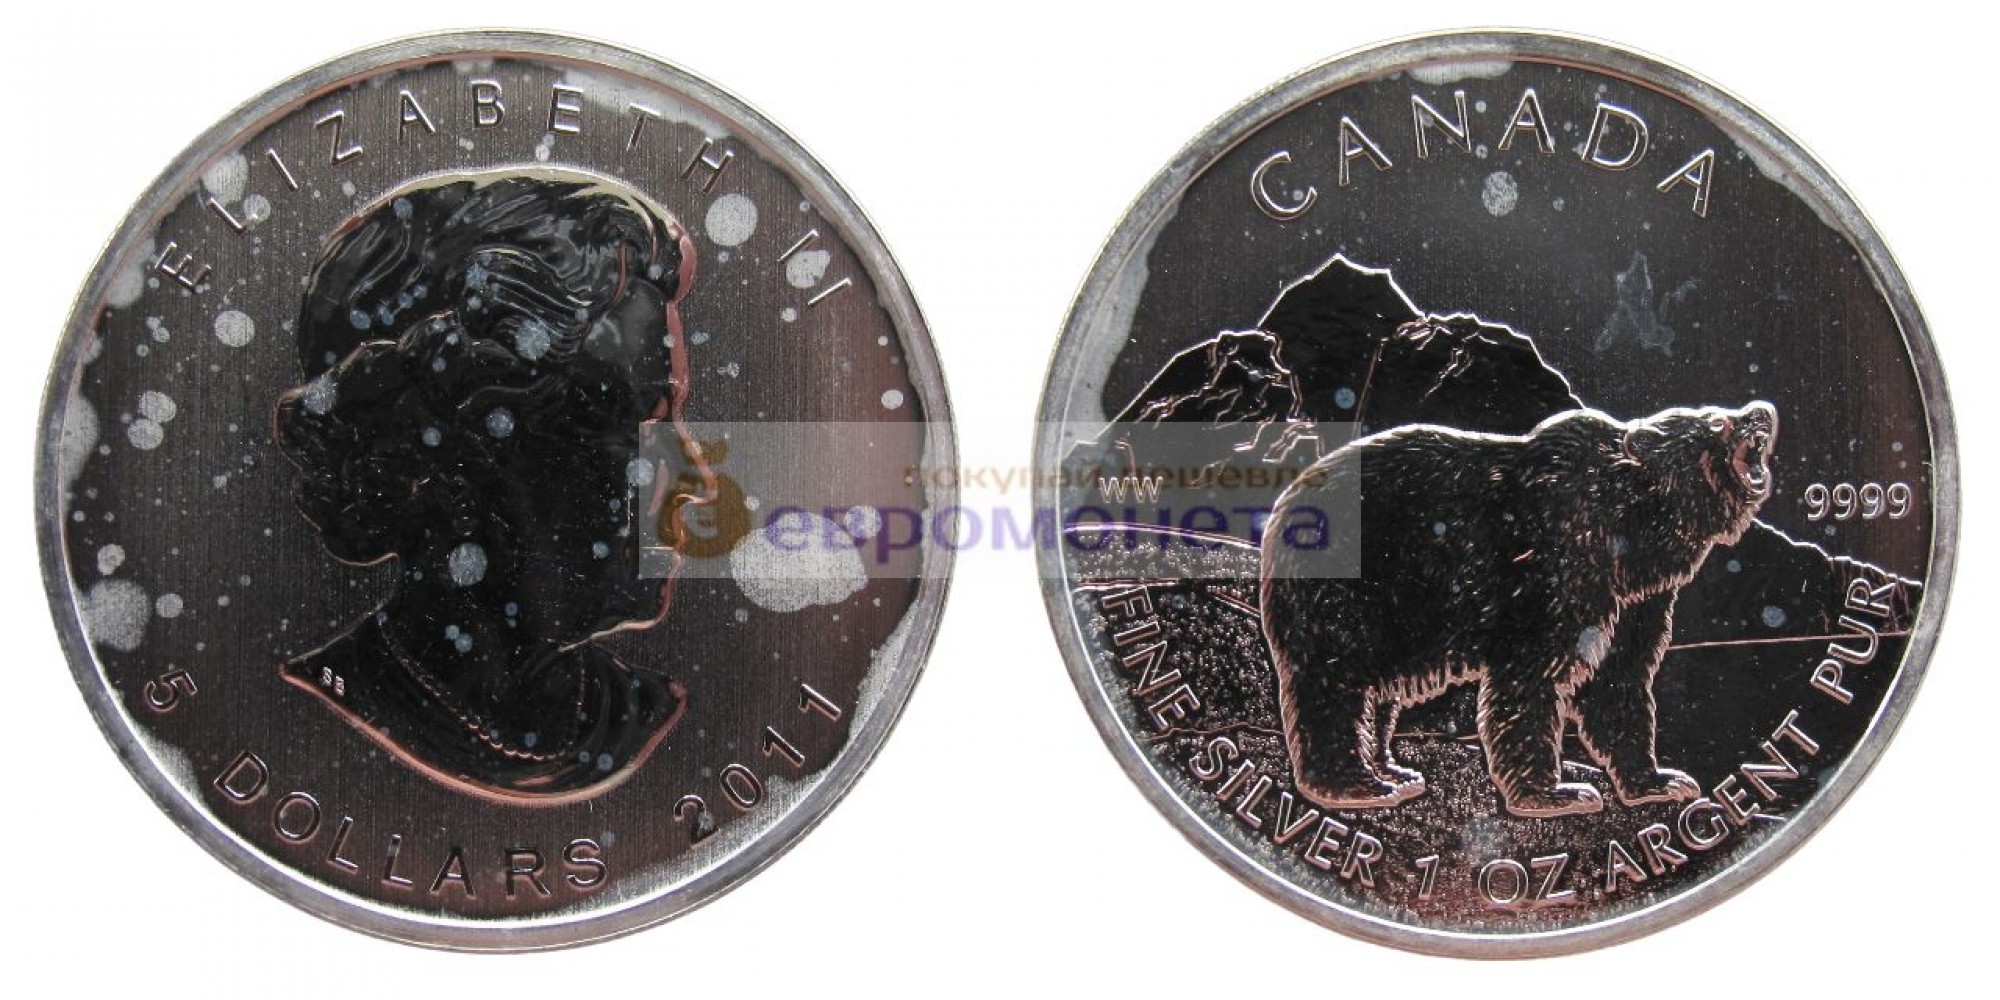 Канада 5 долларов 2011 год Природа Канады - Гризли. Серебро унция 999 пробы